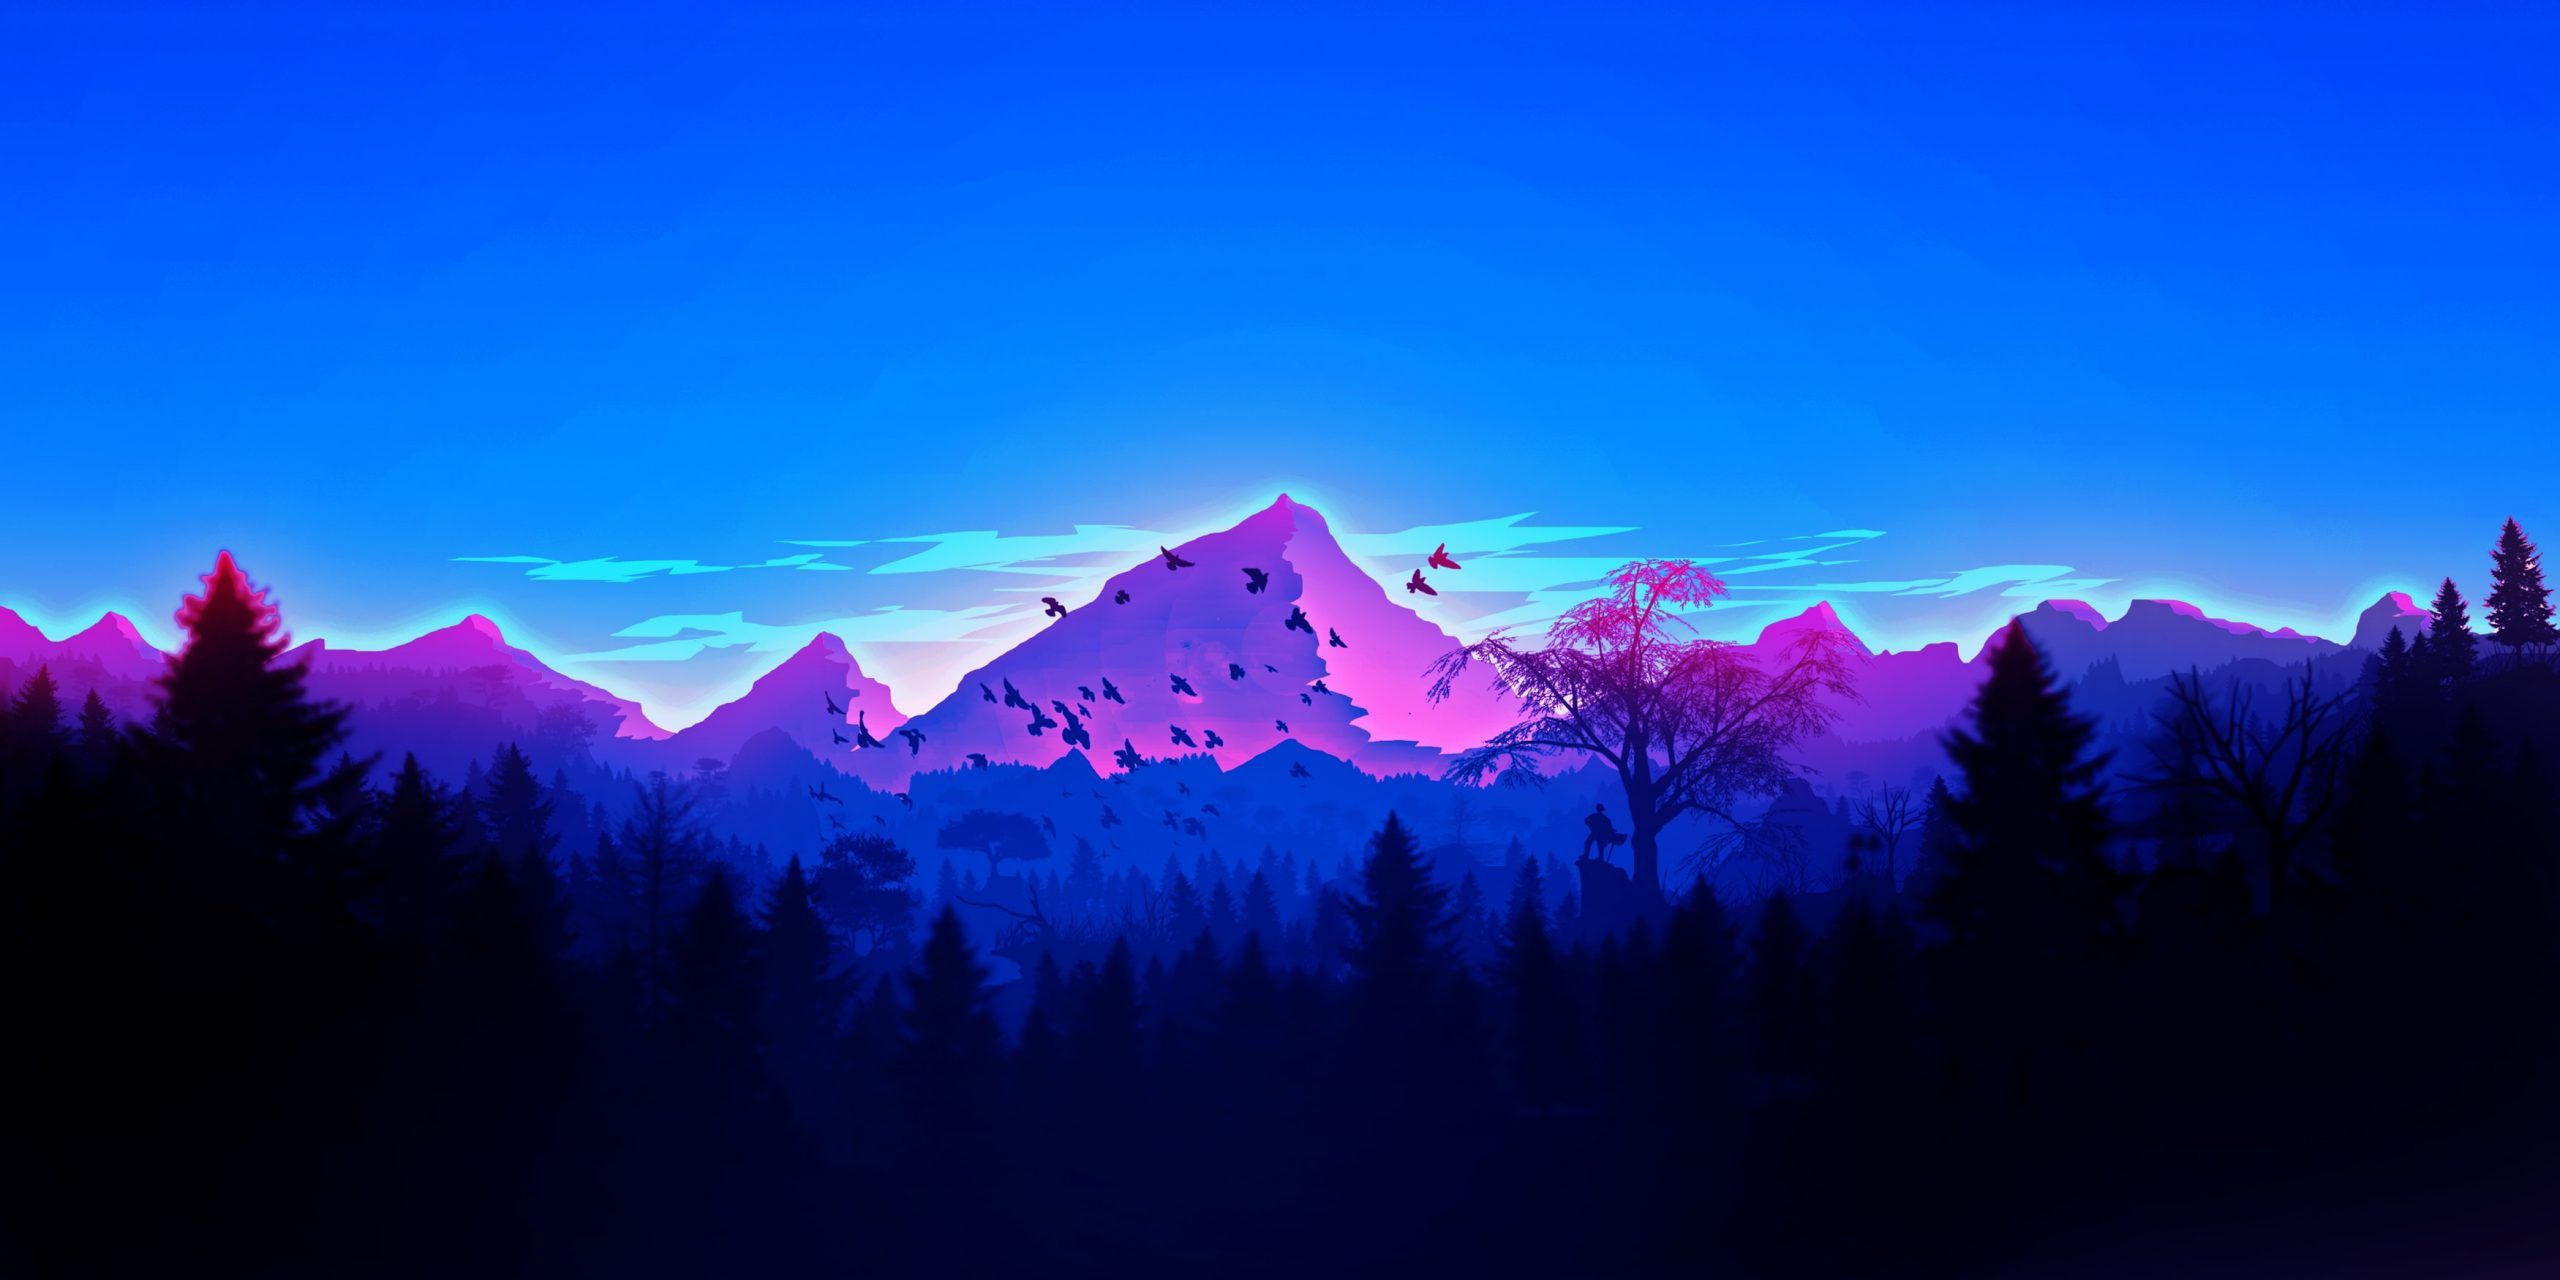 Aesthetic Wallpaper • wallpaper artwork, landscape, mountains, forest • Wallpaper For You The Best HD Wallpaper For Desktop & Mobile